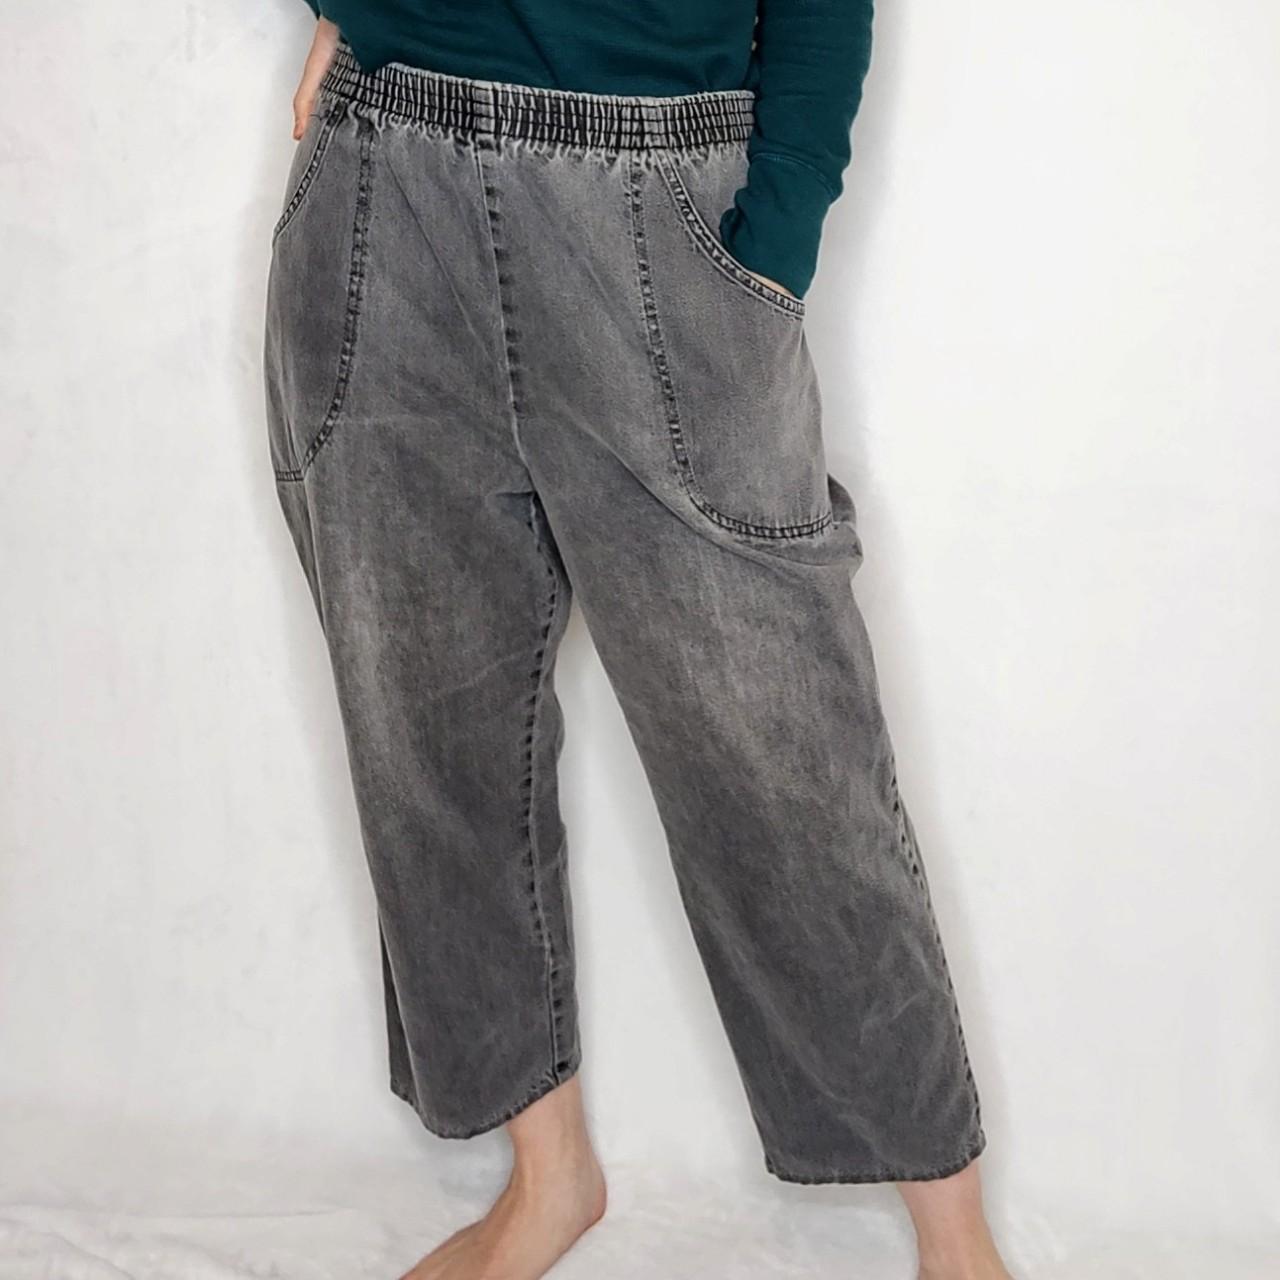 Sag Harbor Women's Grey Jeans